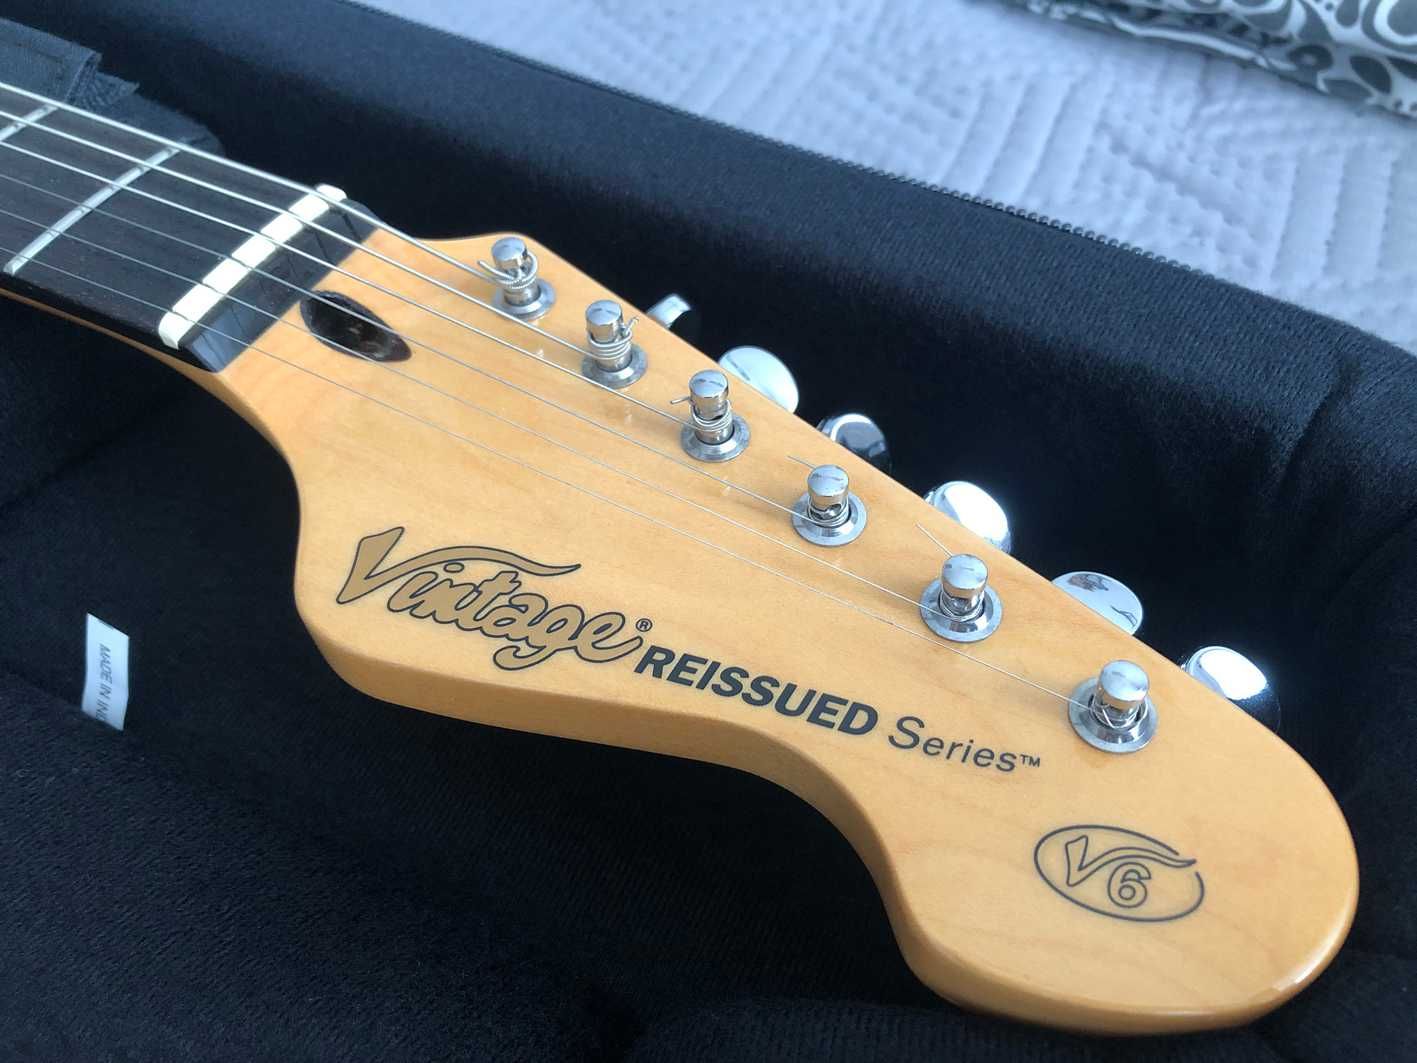 Gitara Vintage V6 Stratocaster